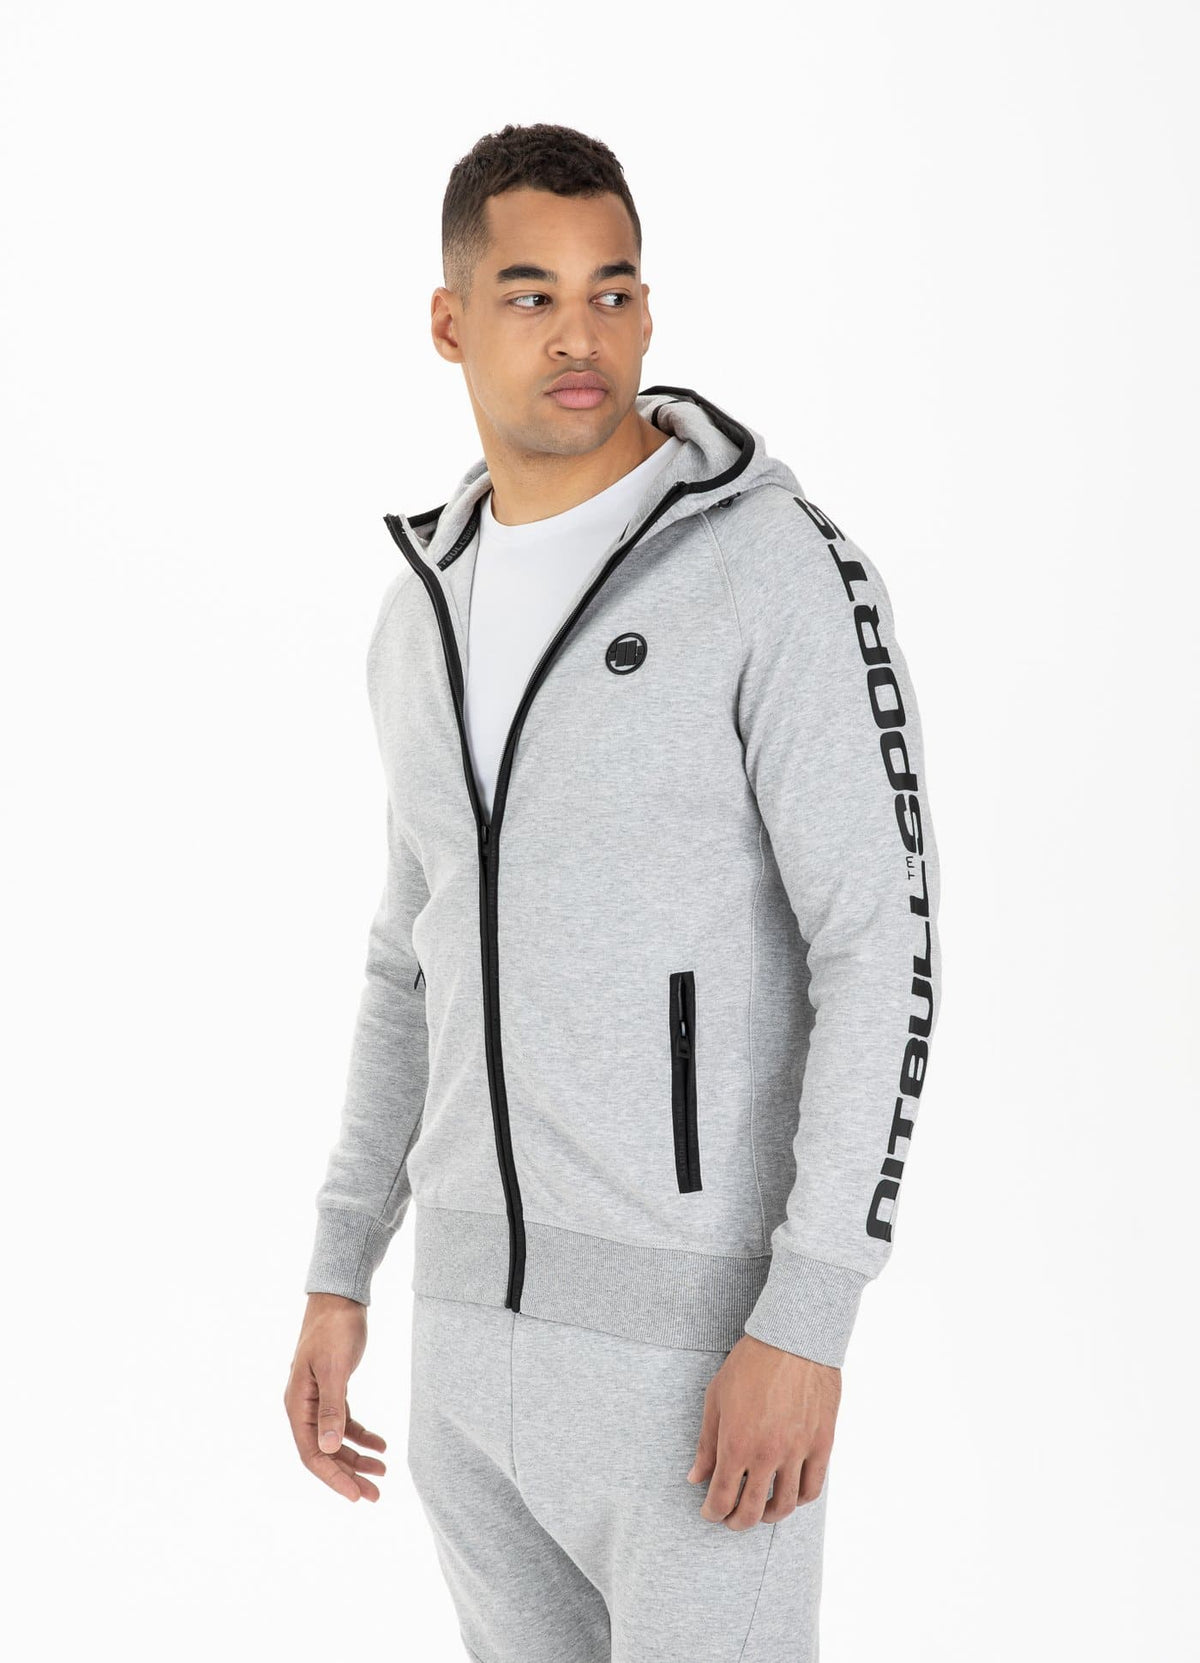 Thelborn Hooded Zip Sweatshirt Grey MLG - Pitbull West Coast International Store 